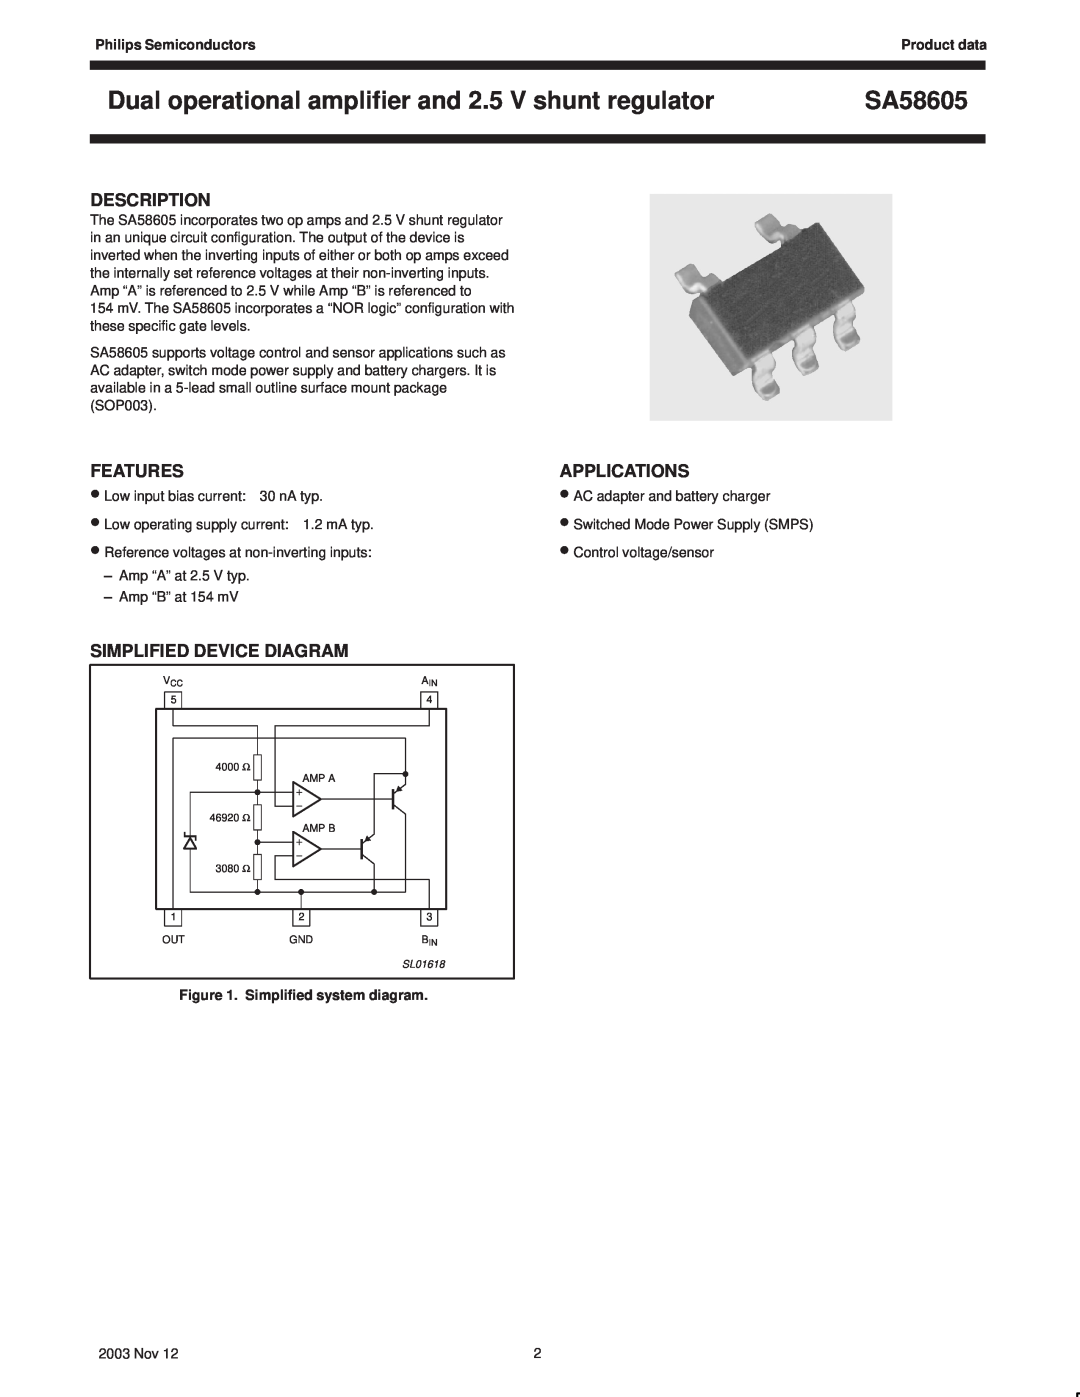 Philips SA58605 manual Description, Features, Simplified Device Diagram, Applications 